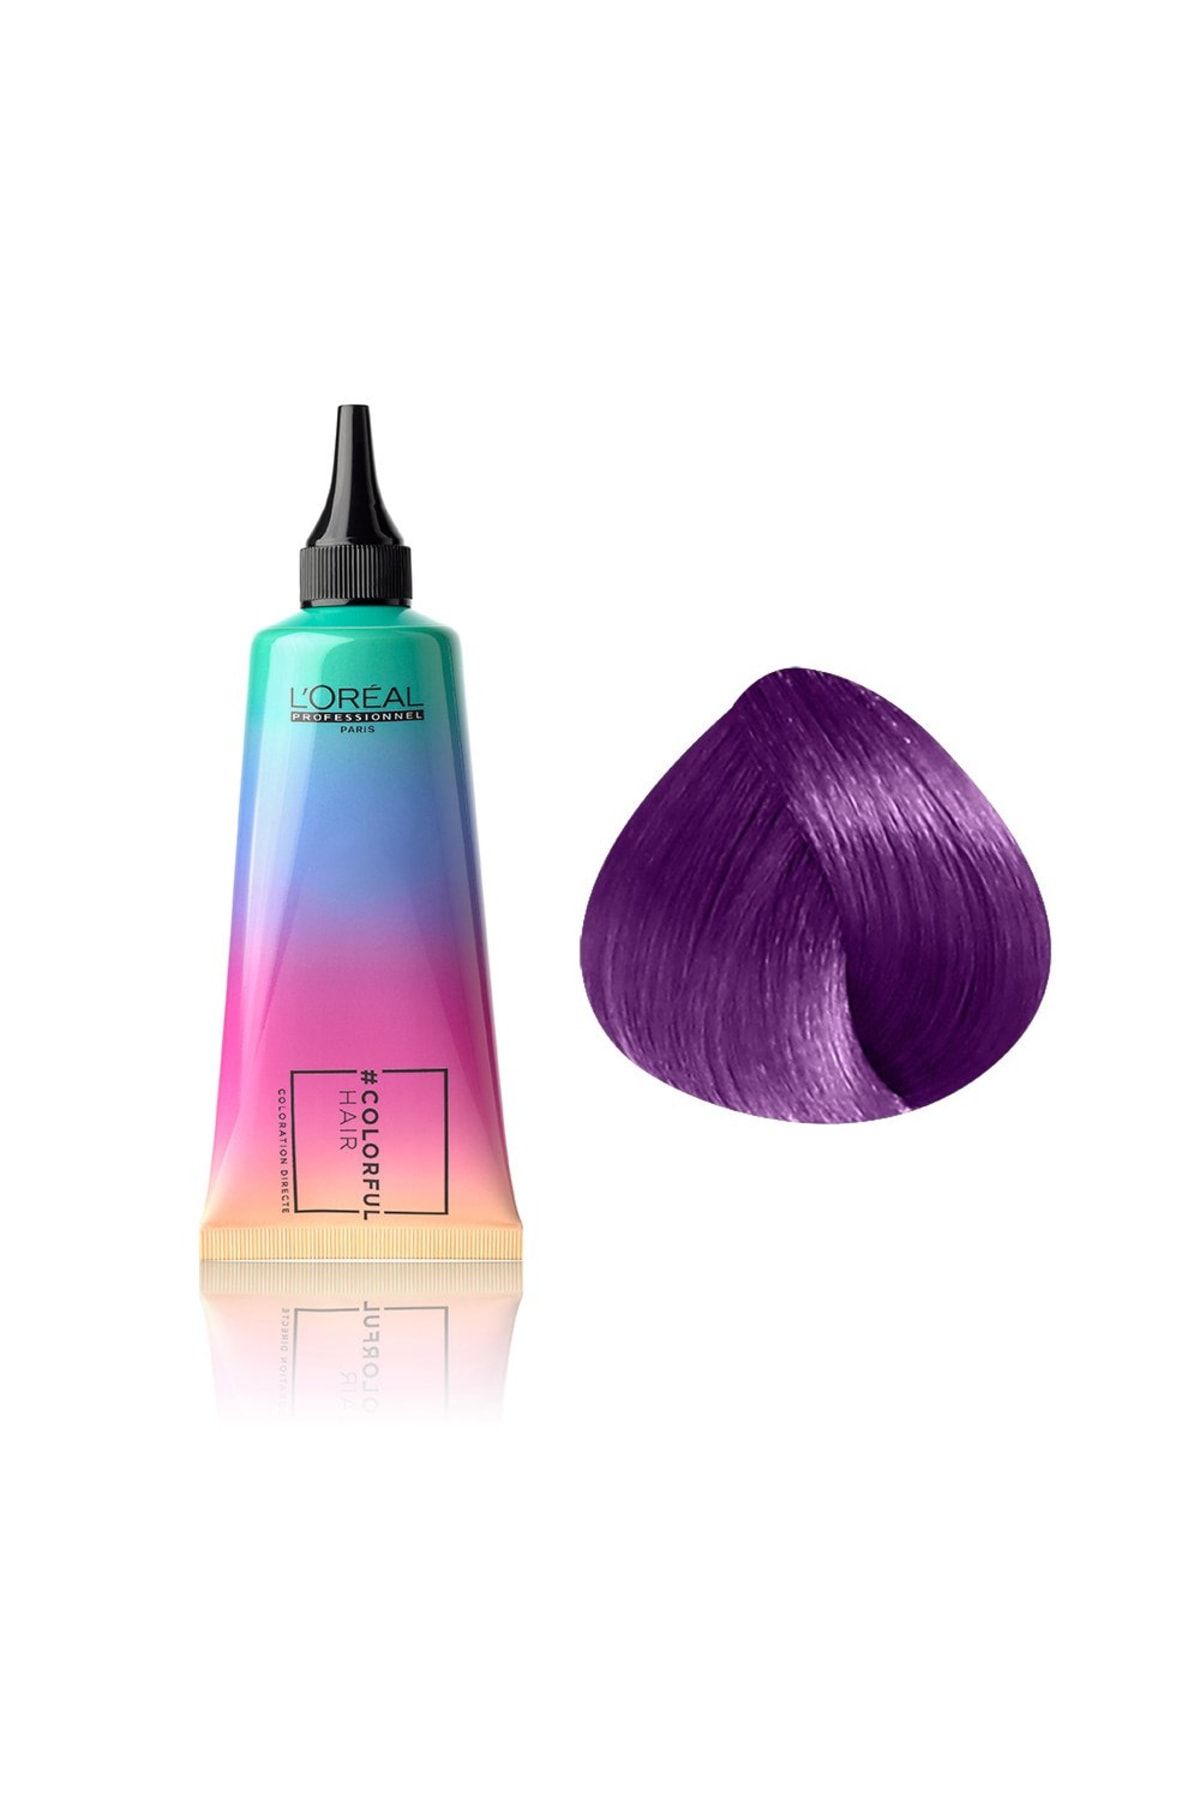 L'oreal Professionnel Colorful Hair Electric Purple Doğal Mor Saç Boyası 90ml